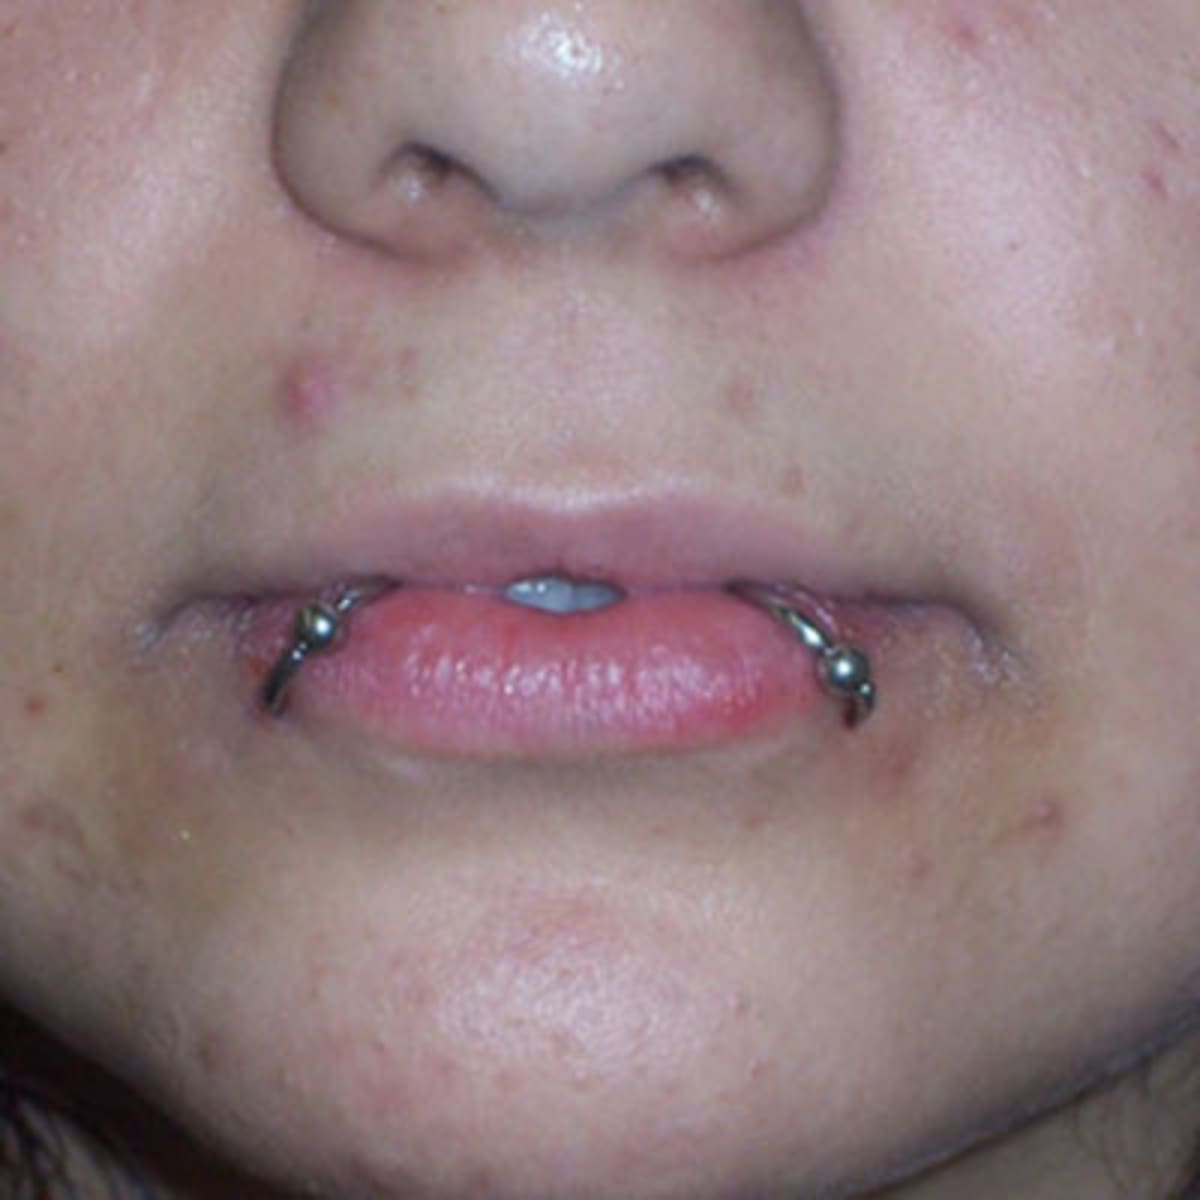 lip ring scar tissue build up